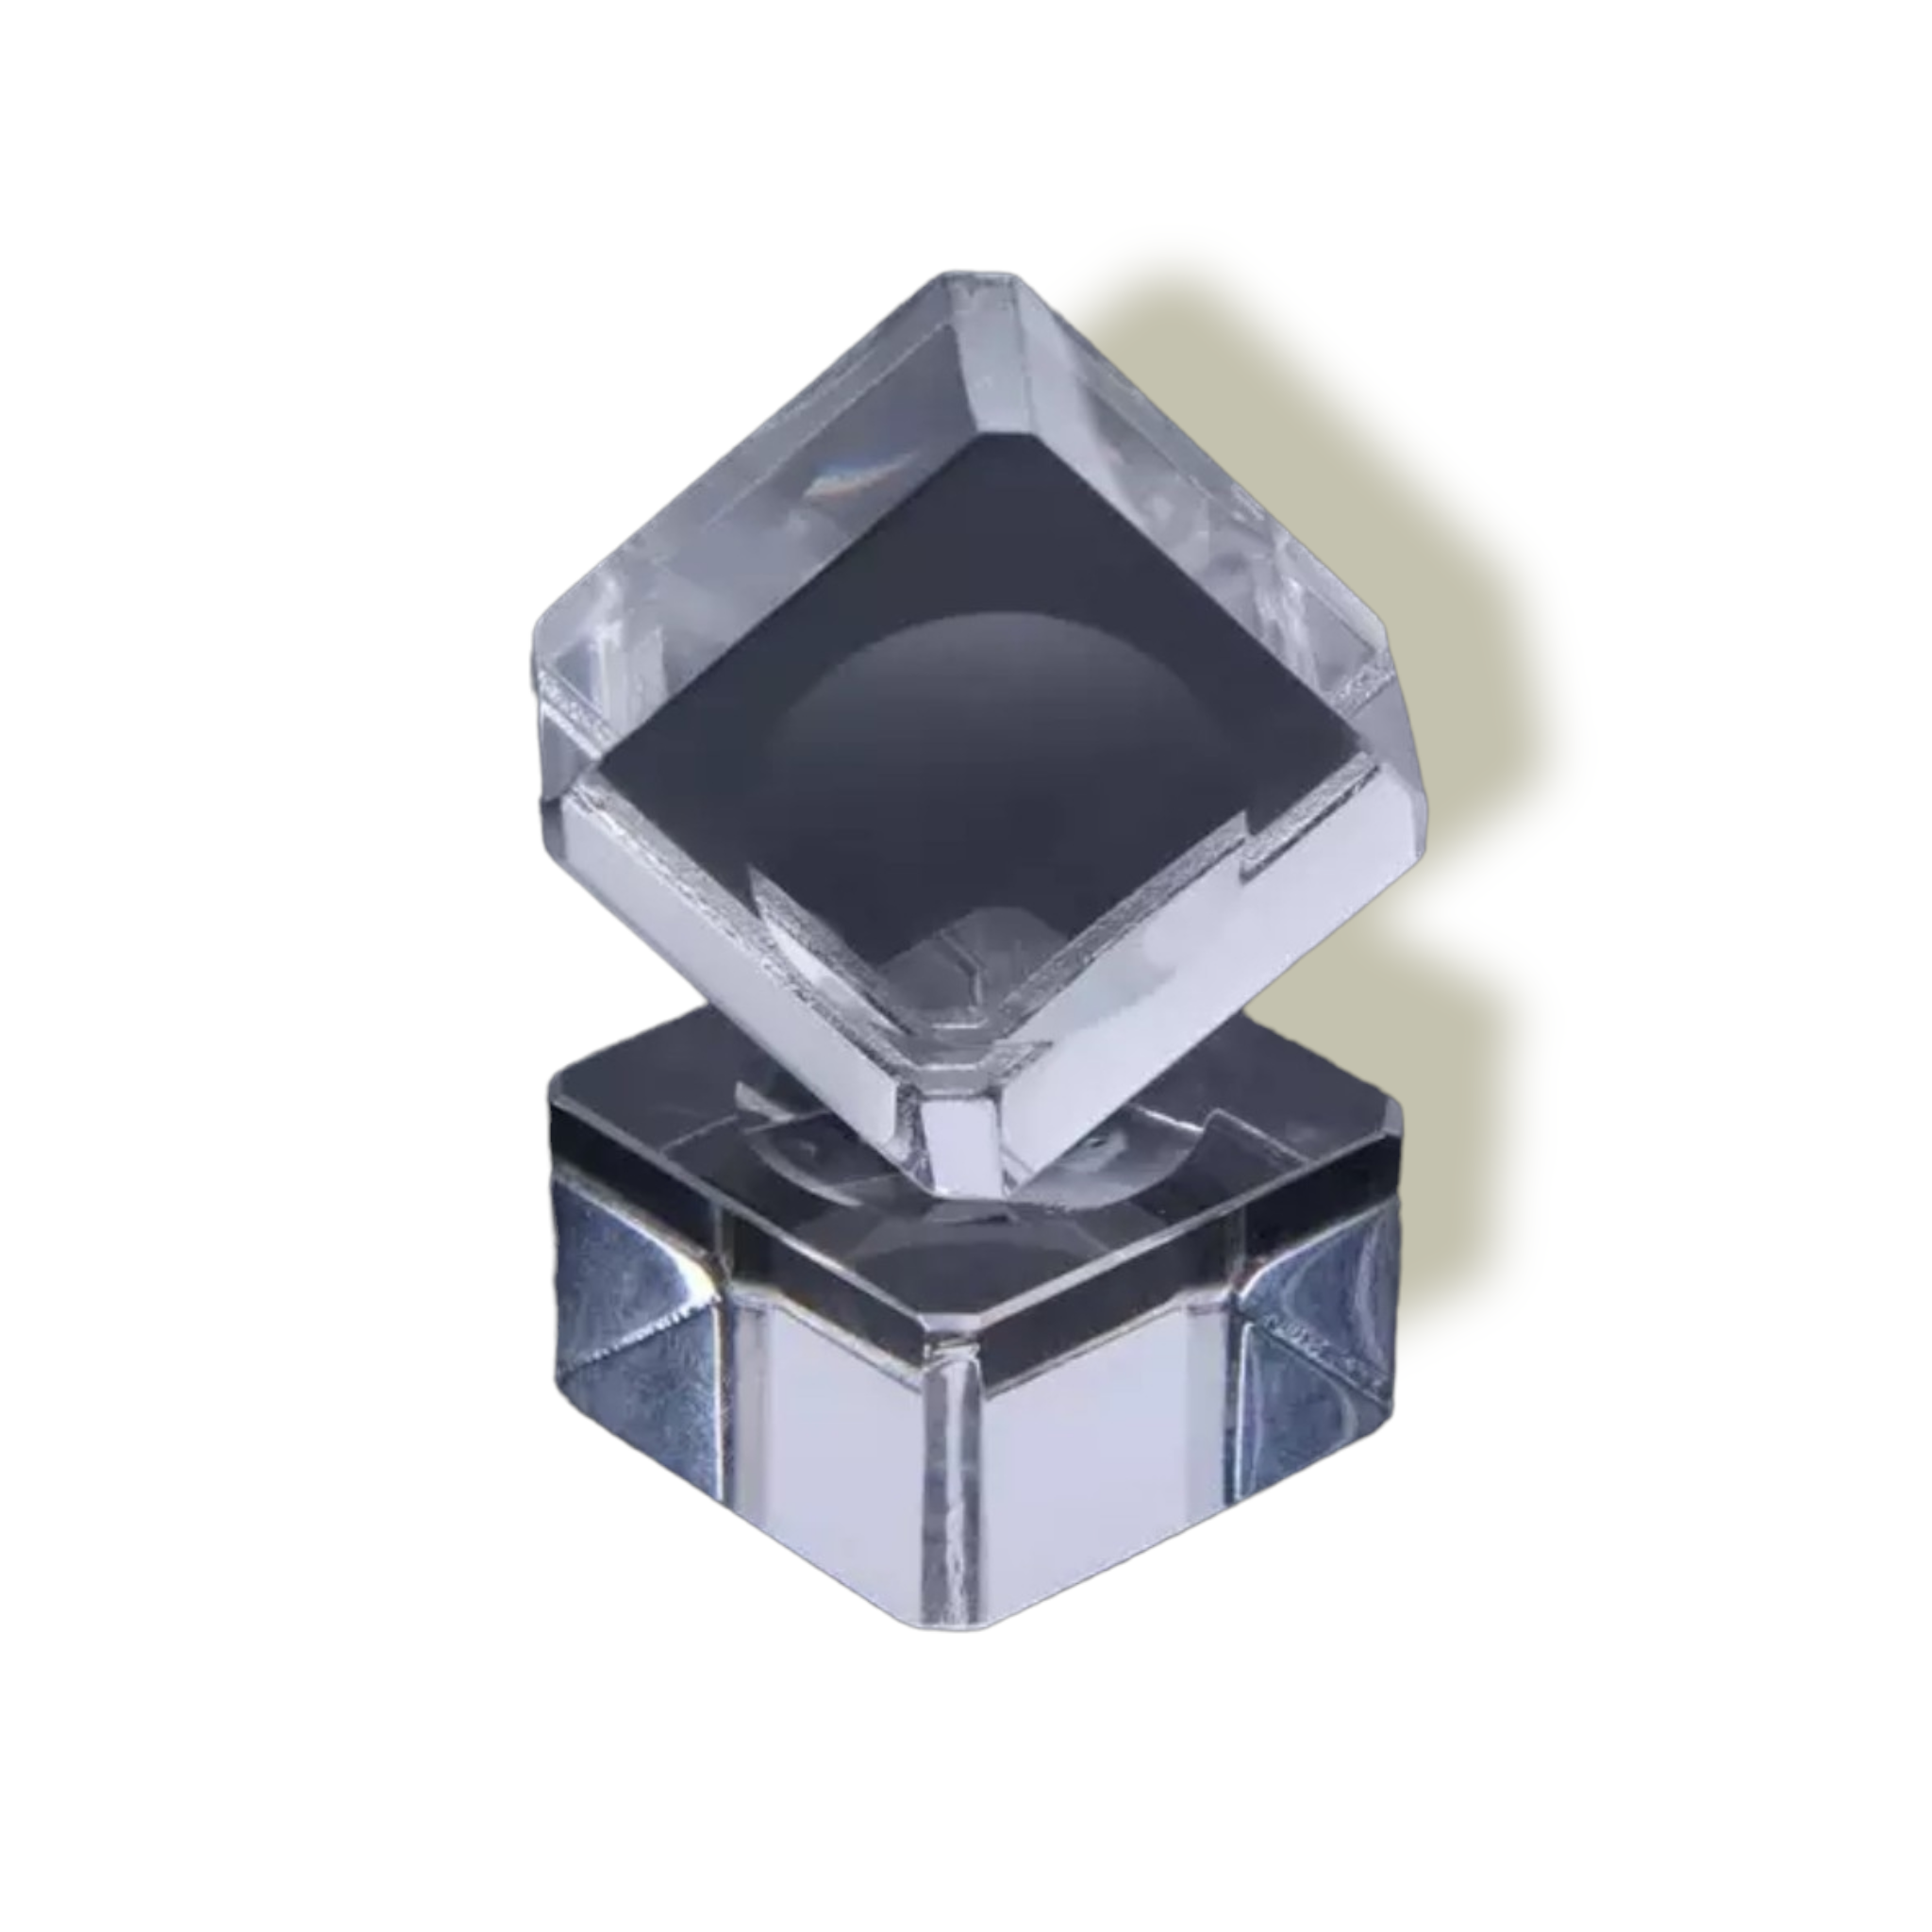 Kleberunterlage Crystal 2,5x2,5cm